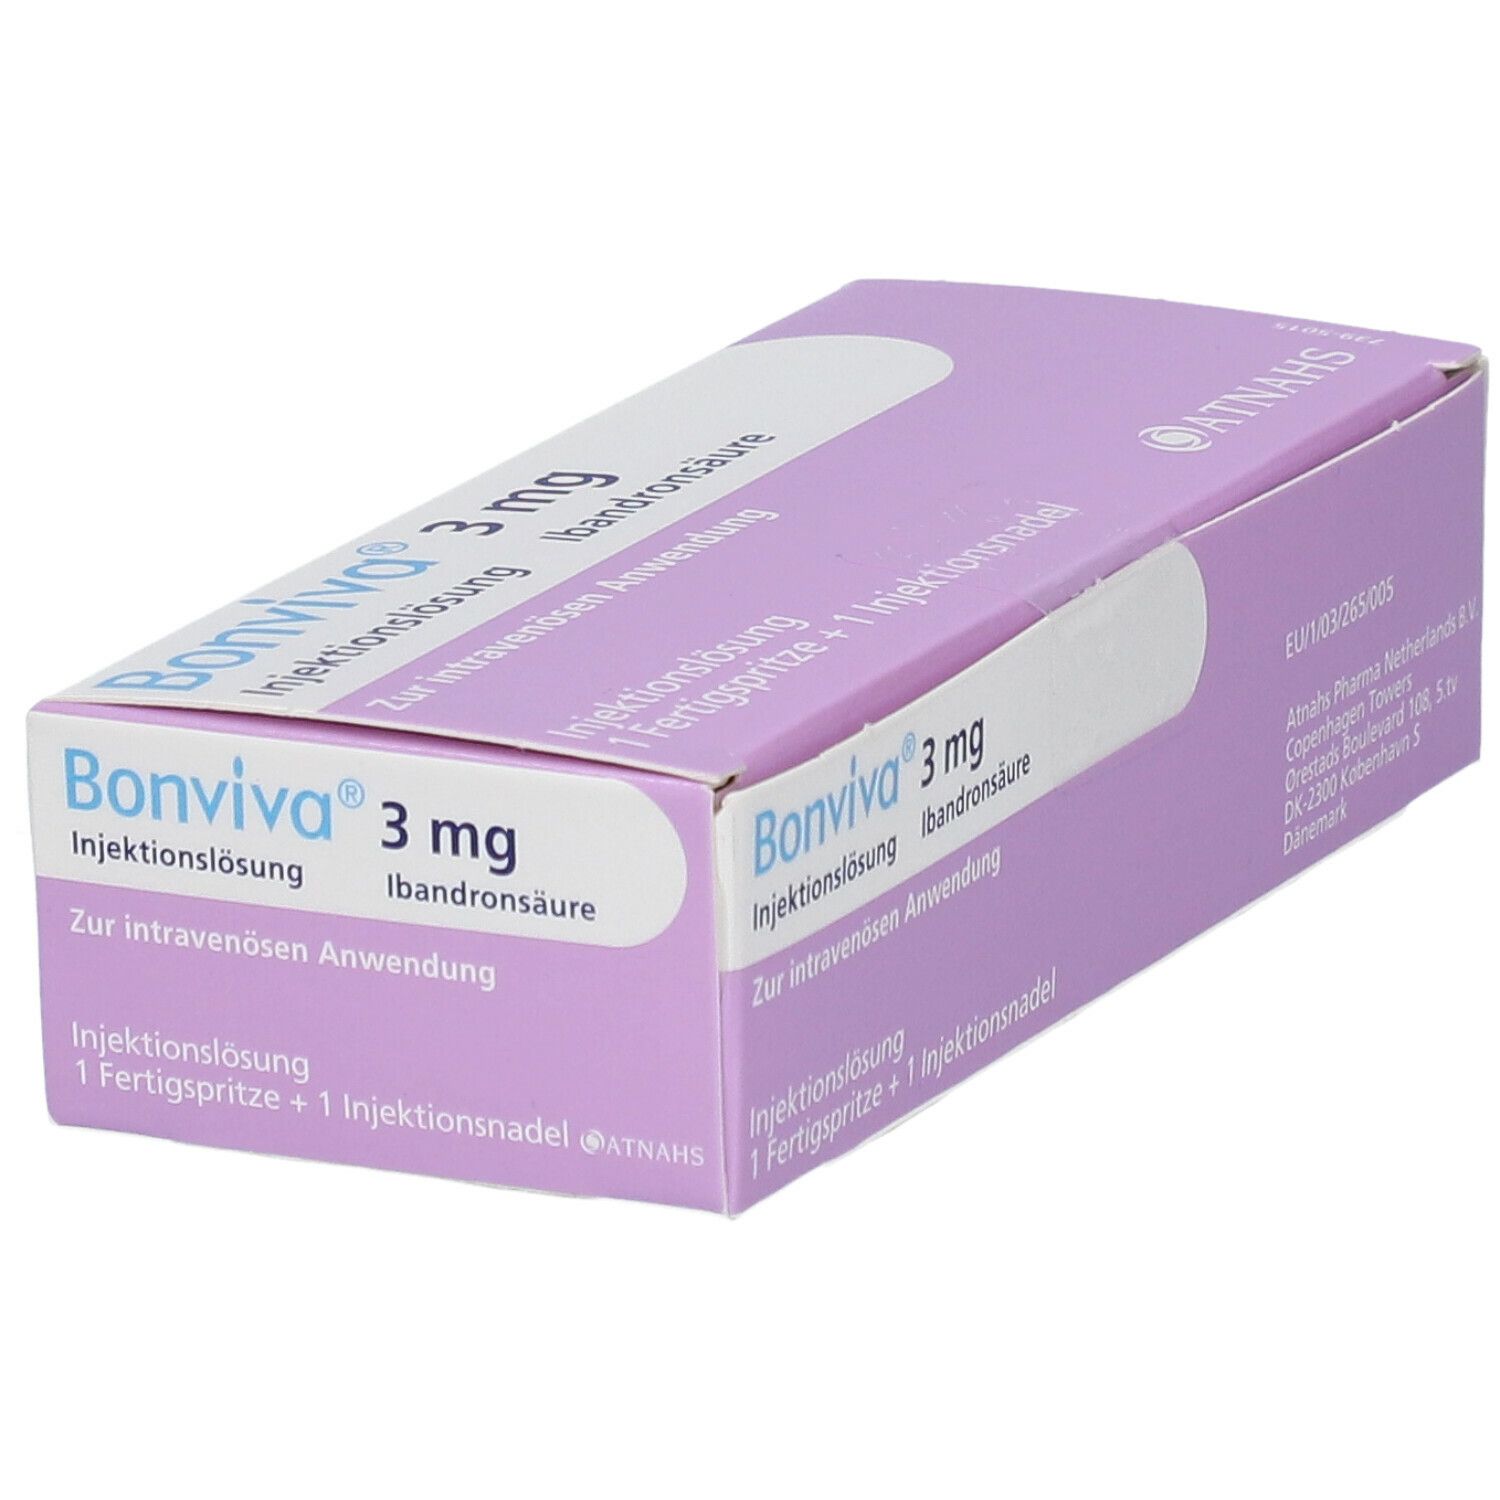 Bonviva® 3 mg